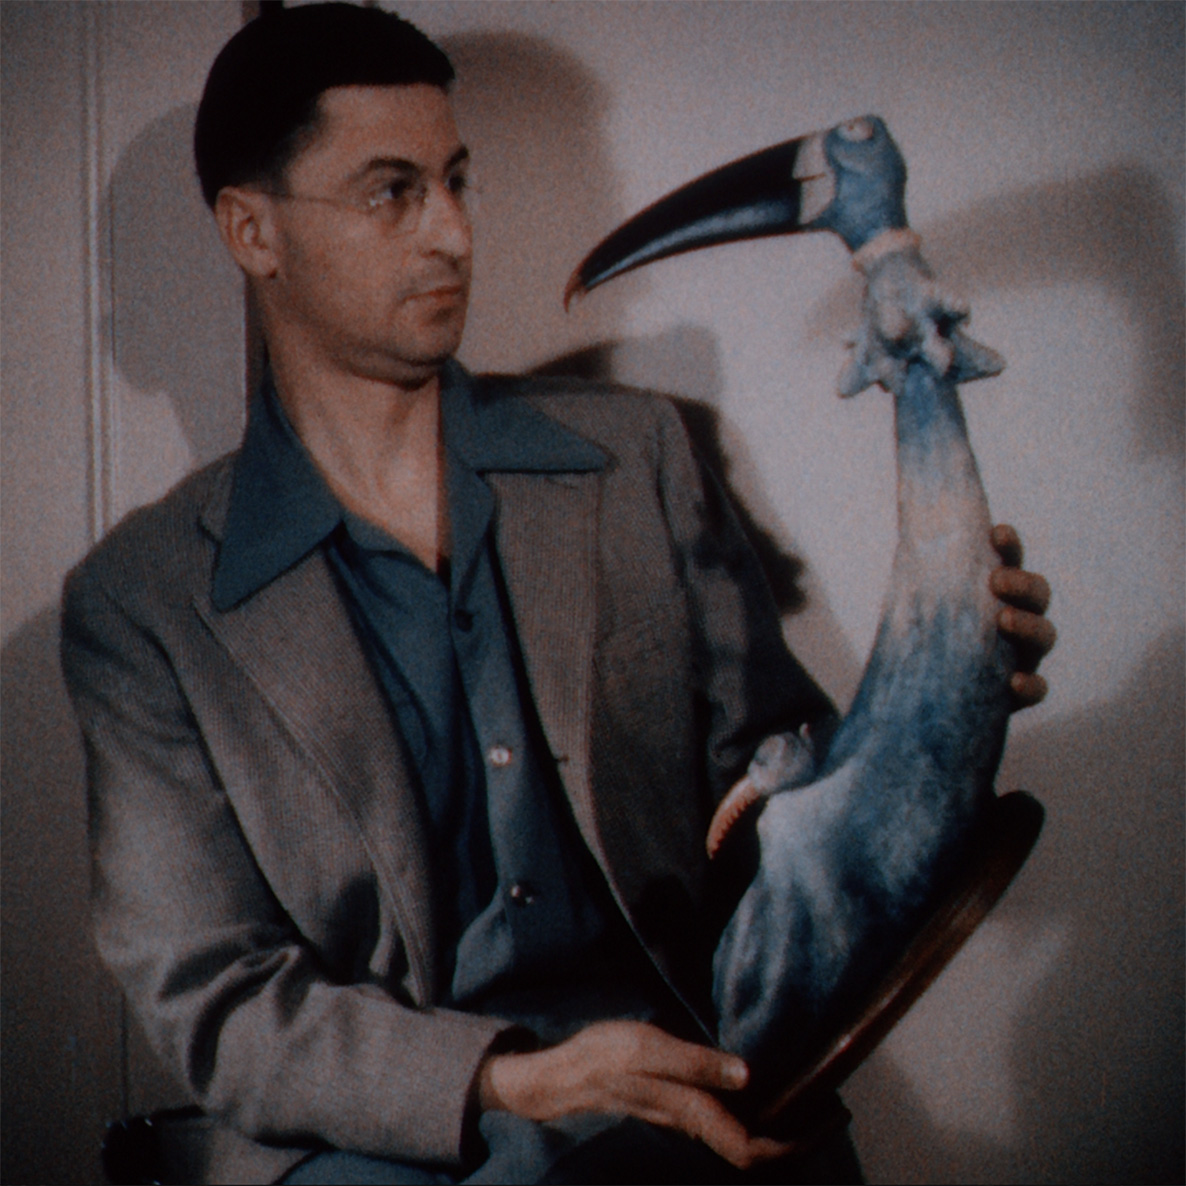 Man holding a plastic bird